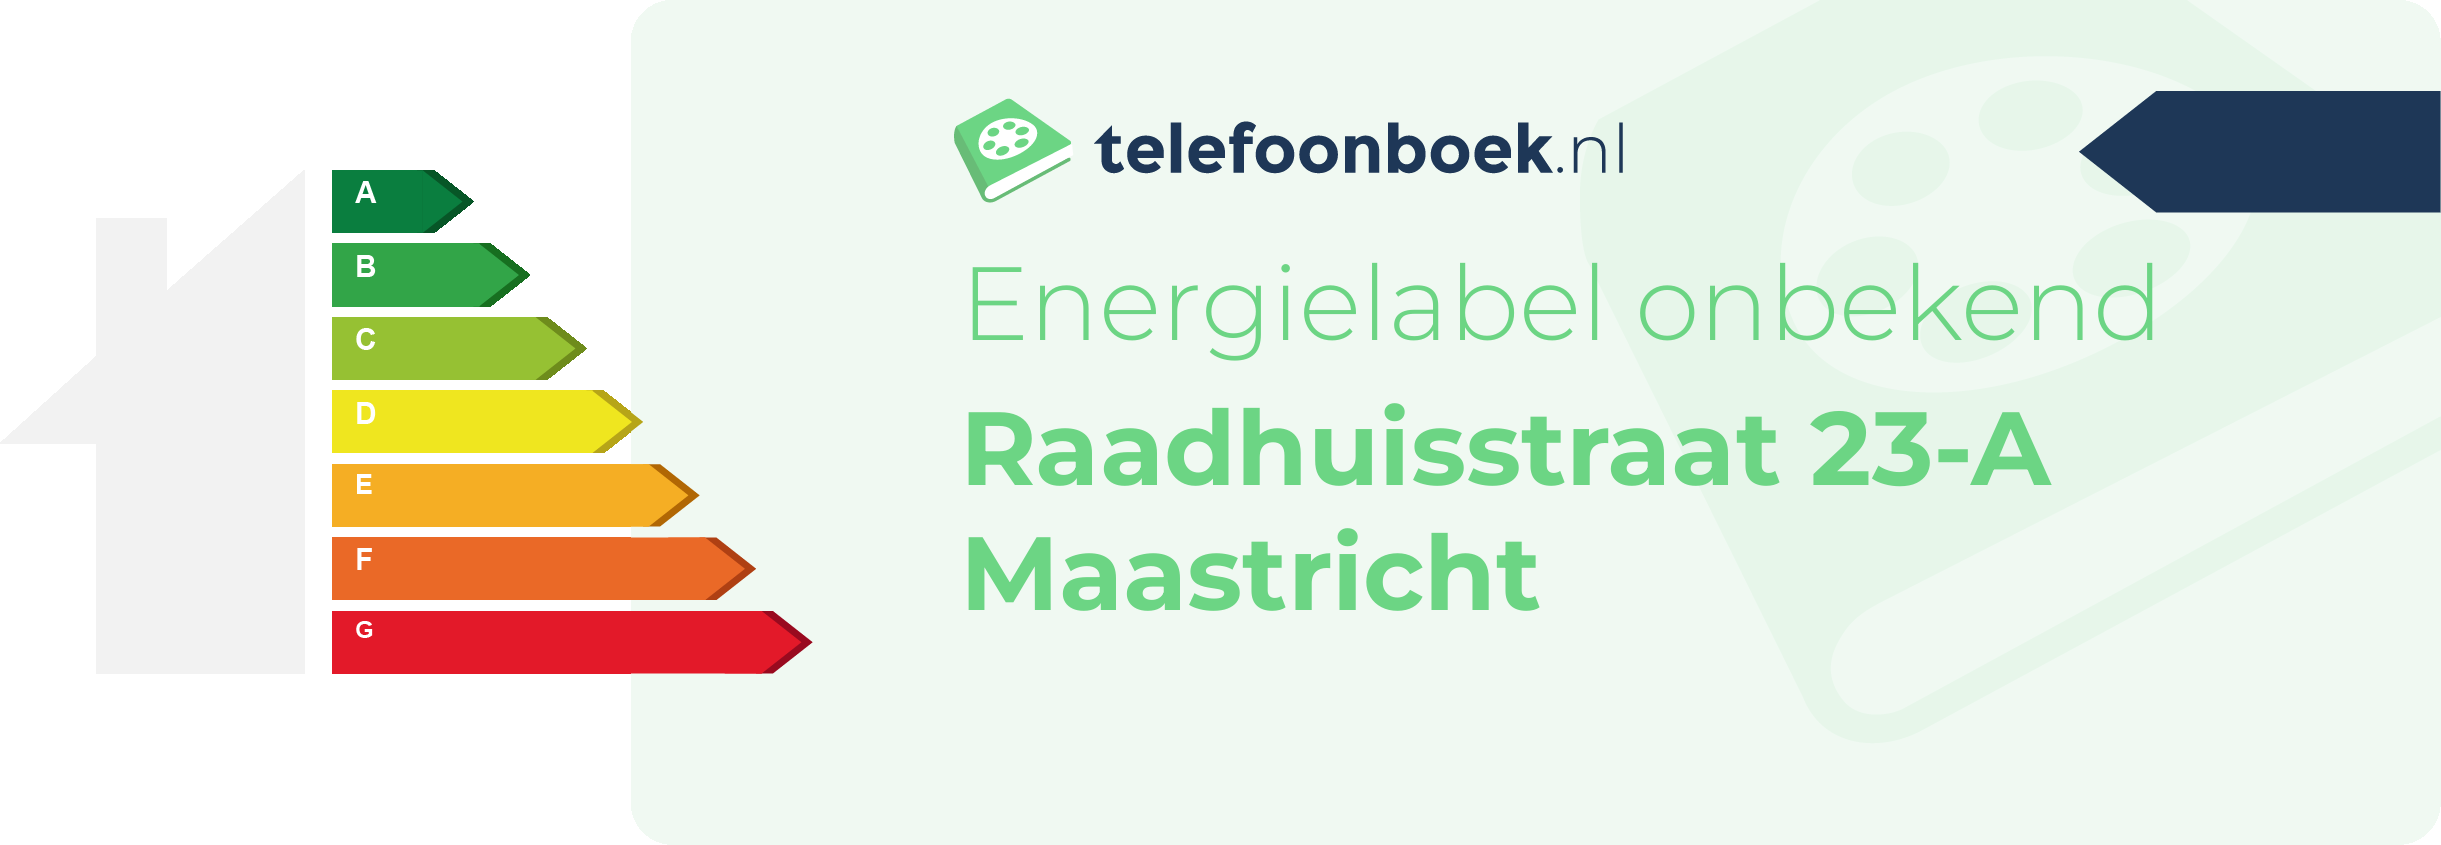 Energielabel Raadhuisstraat 23-A Maastricht